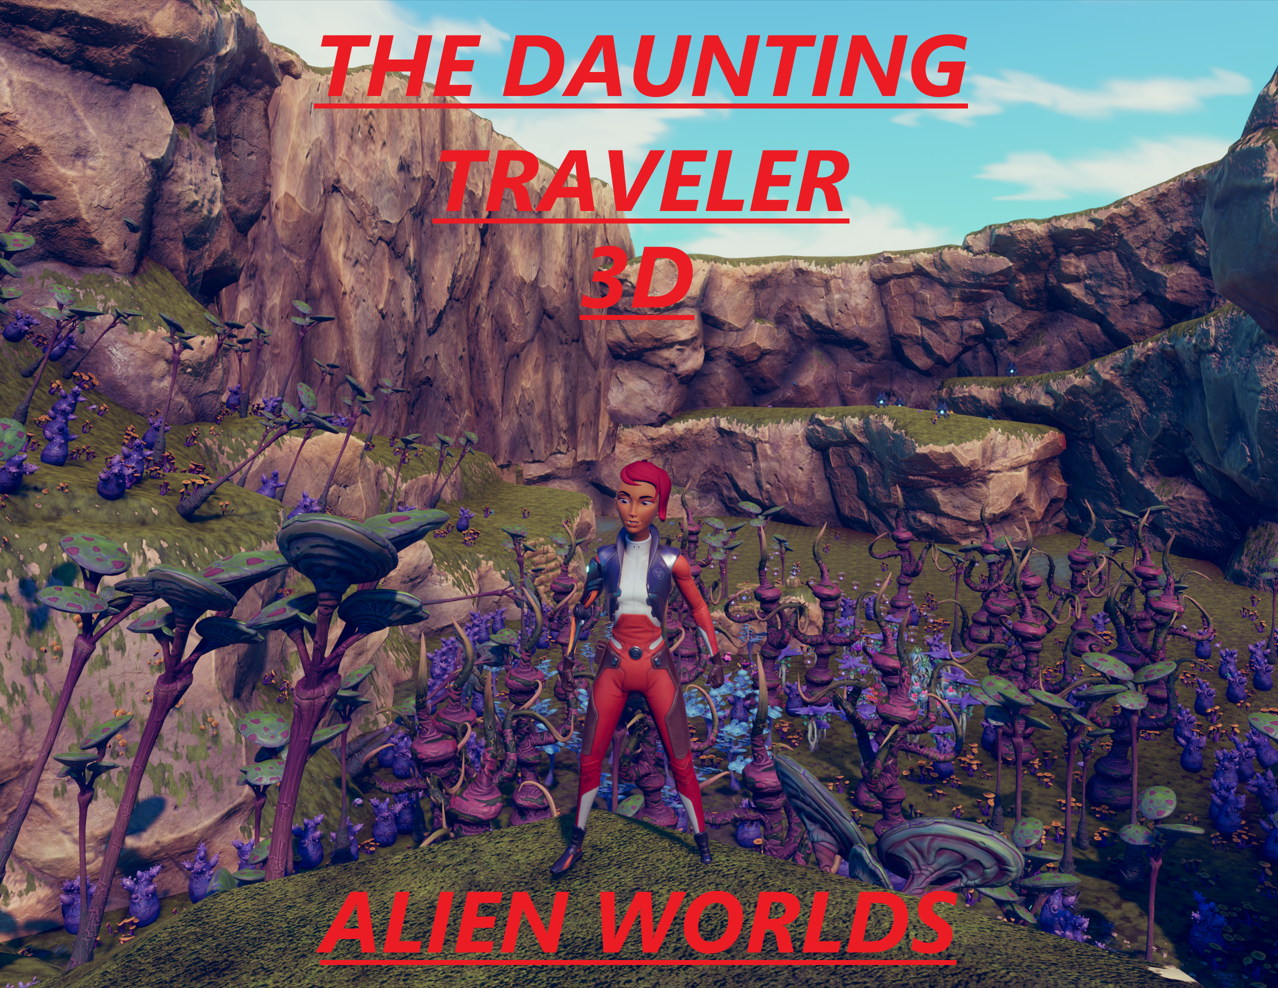 The Daunting Traveler 3D Alien Worlds